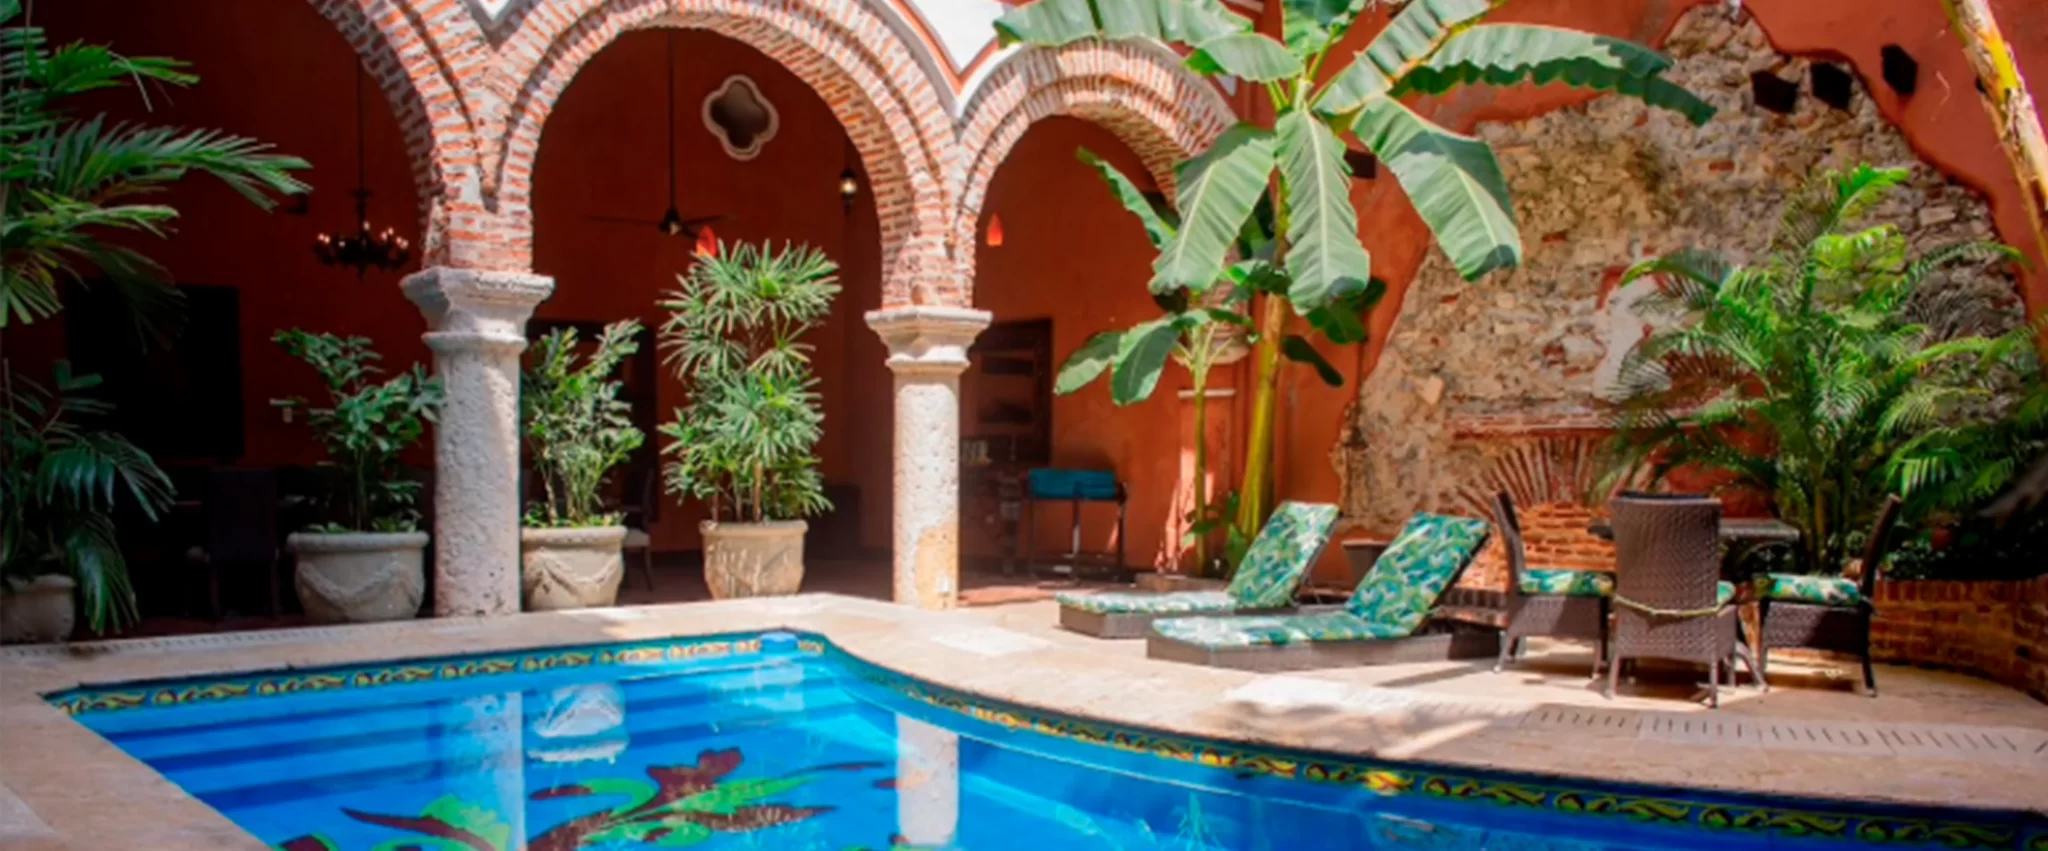 Villa 19th Century - Classy Cartagena